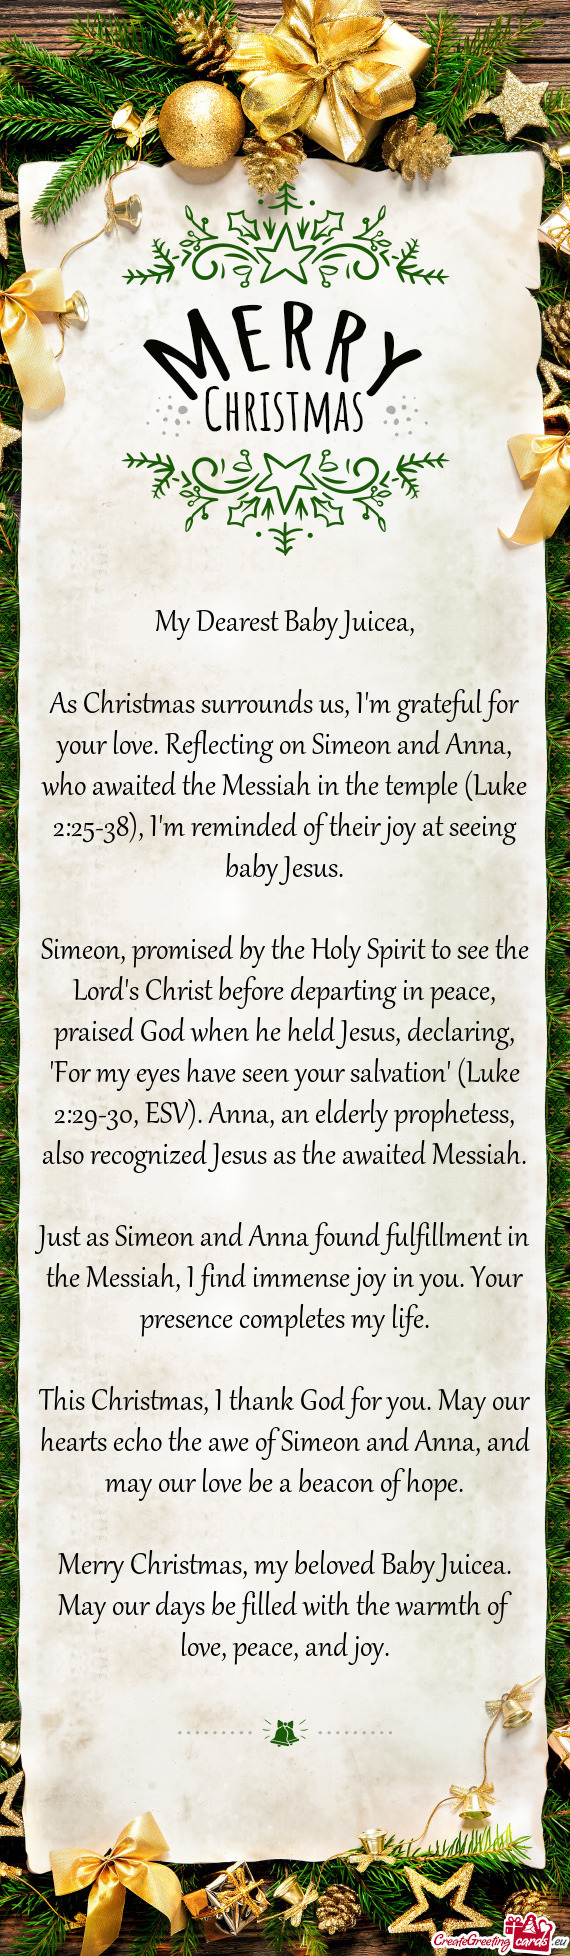 E Messiah in the temple (Luke 2:25-38), I